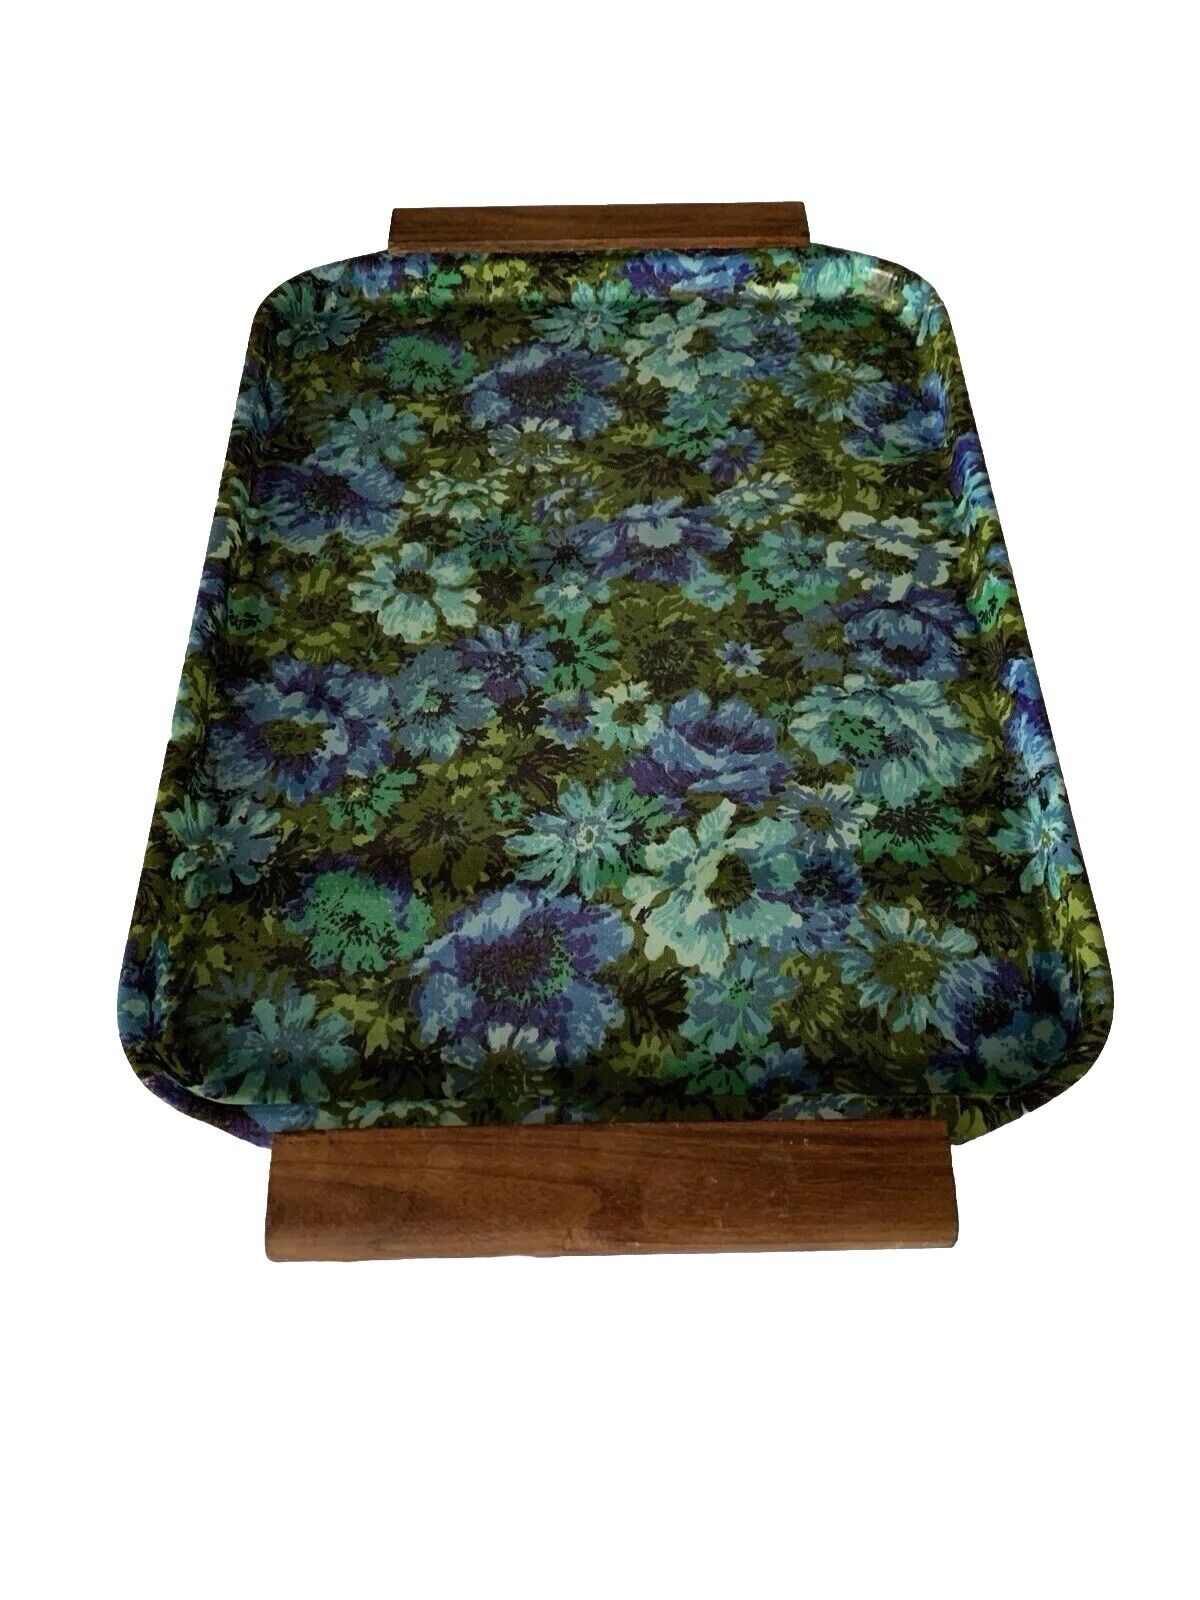 Rexilite by Eubanks fiberglass serving tray blue green florals